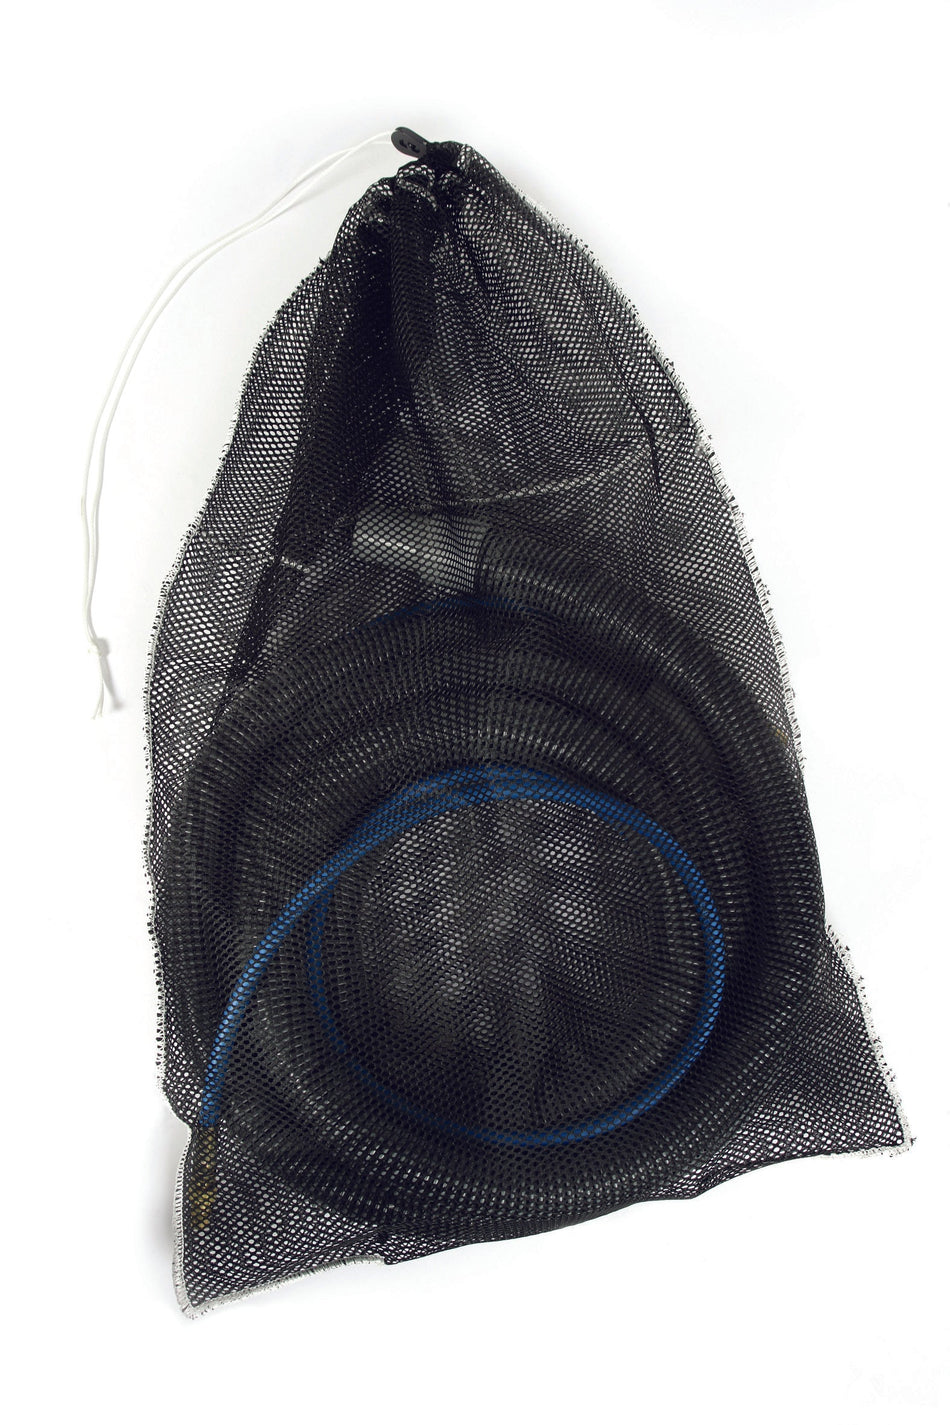 NIMBUS | Prochem AC1045 Mesh hose carry bag (for Comet & Fivestar hand tool AC322) | Attachments, Hose Bags, Machines and Accessories, Prochem, Type_Accessories, | Hose Bags